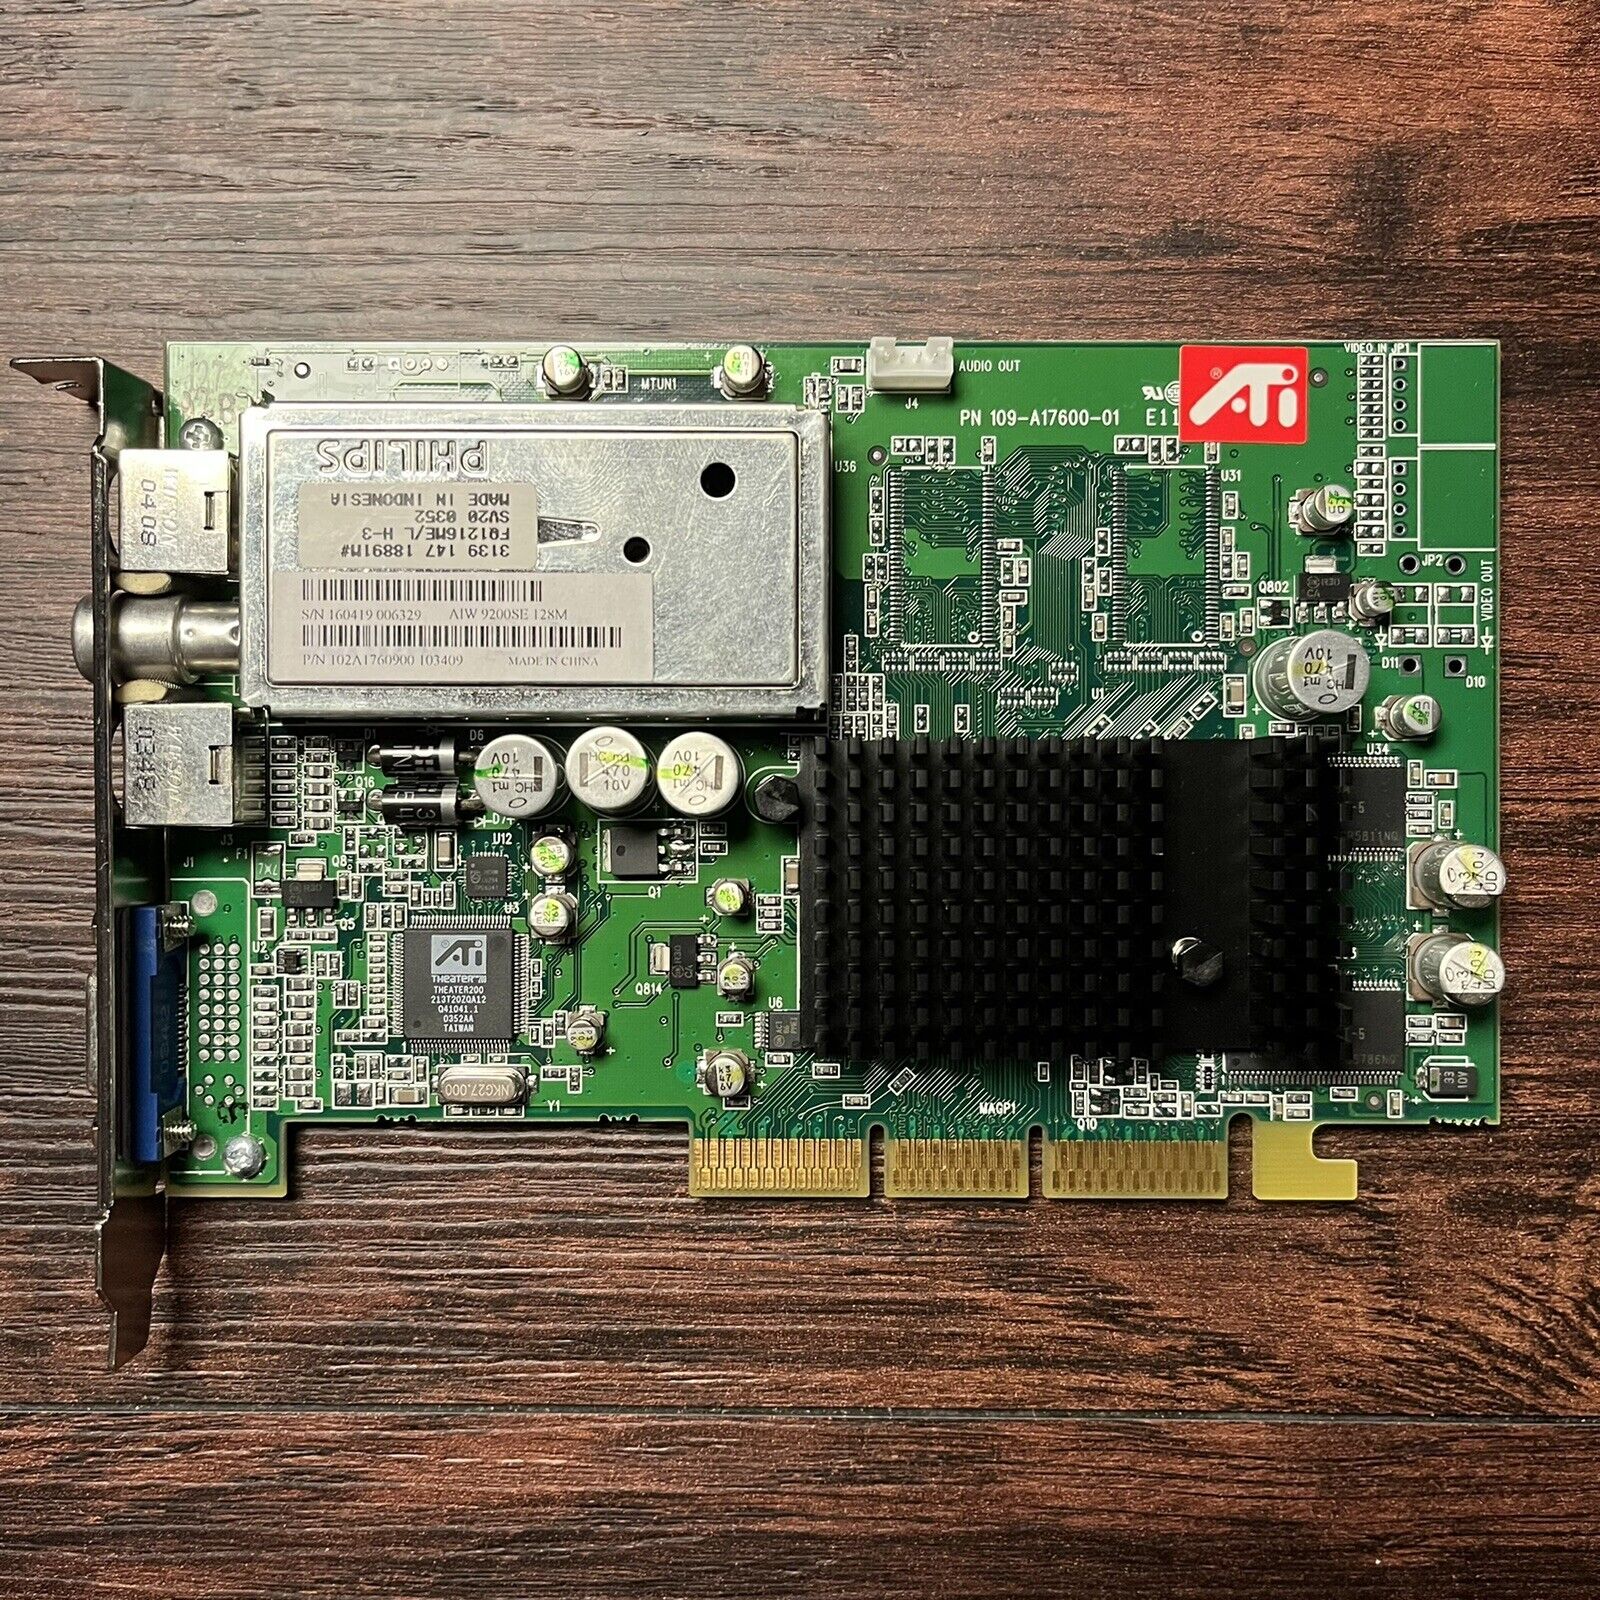 ATI Radeon 9200 SE All in Wonder 128MB AGP Video Card for Windows 98/ME/2K/XP